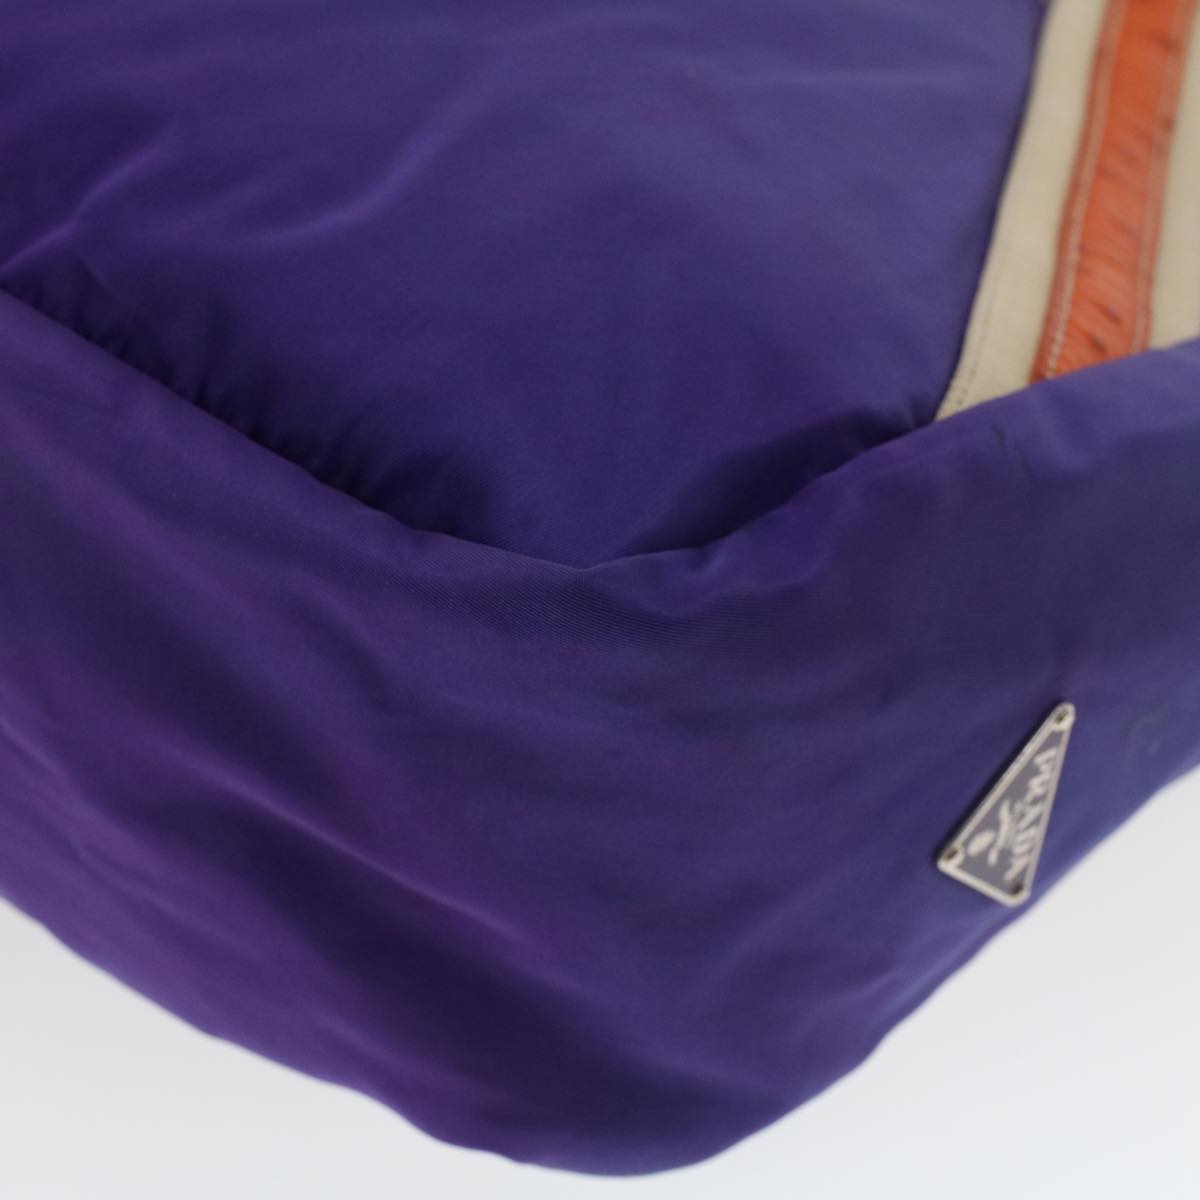 PRADA Tote Bag Nylon Purple Orange Auth bs6261